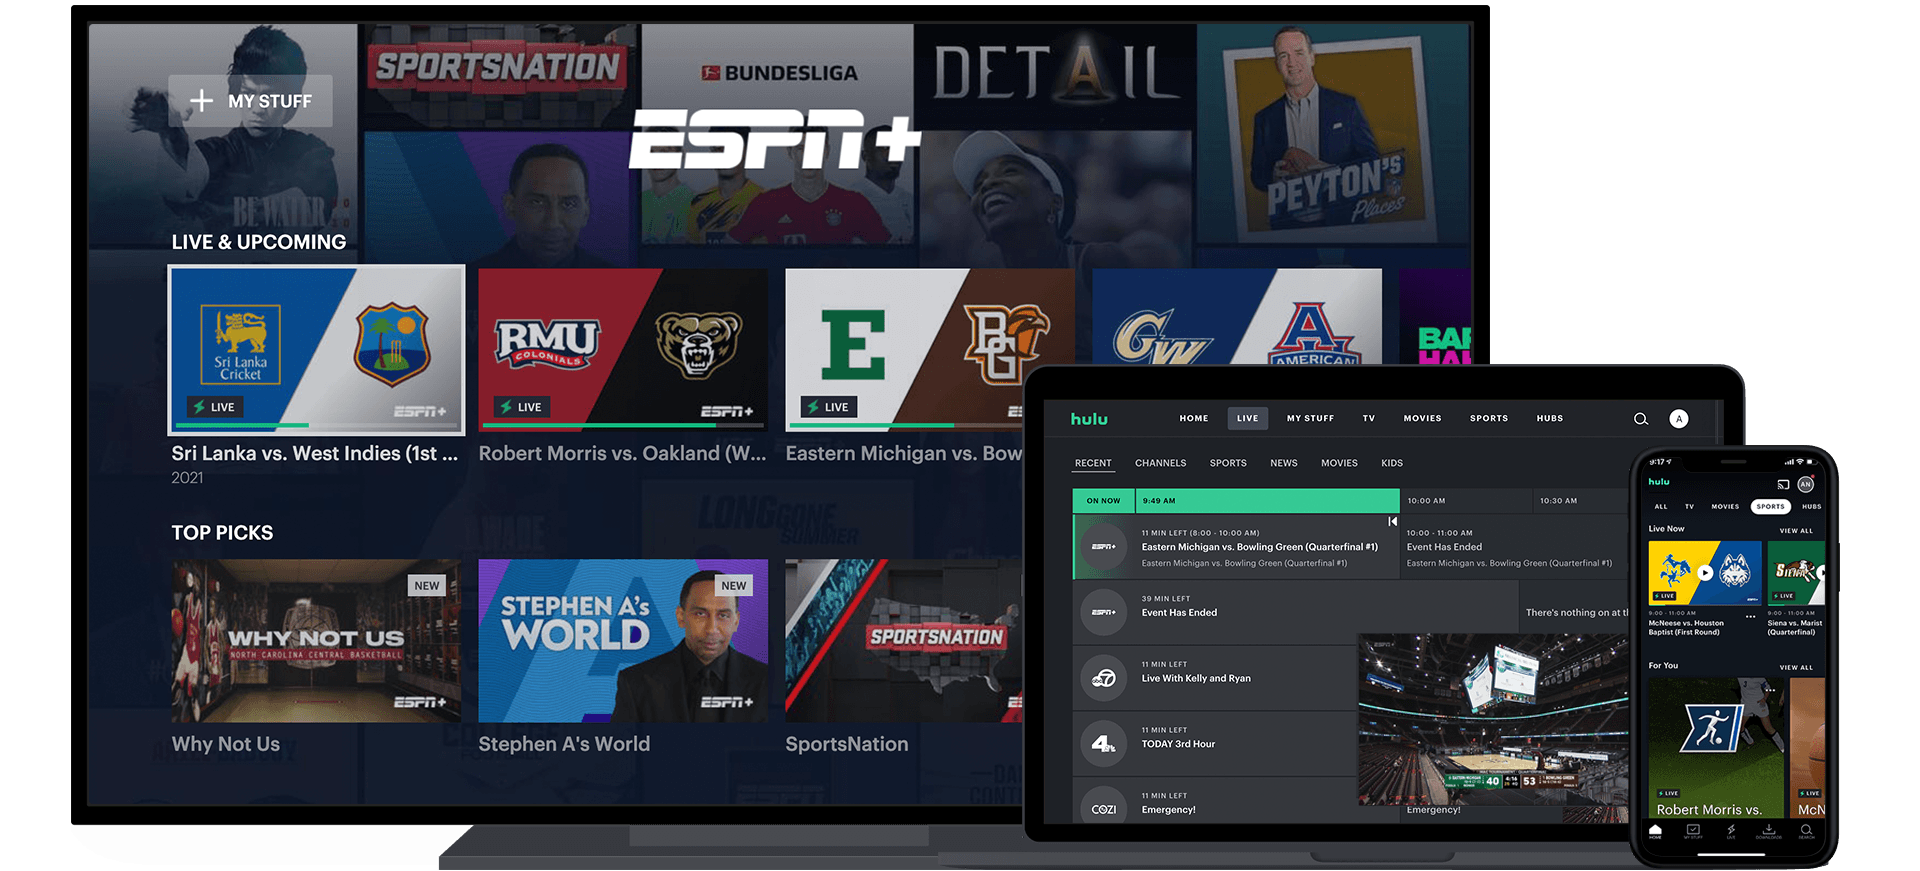 Stream NBA Games on Hulu  Watch Live Sports or On-Demand